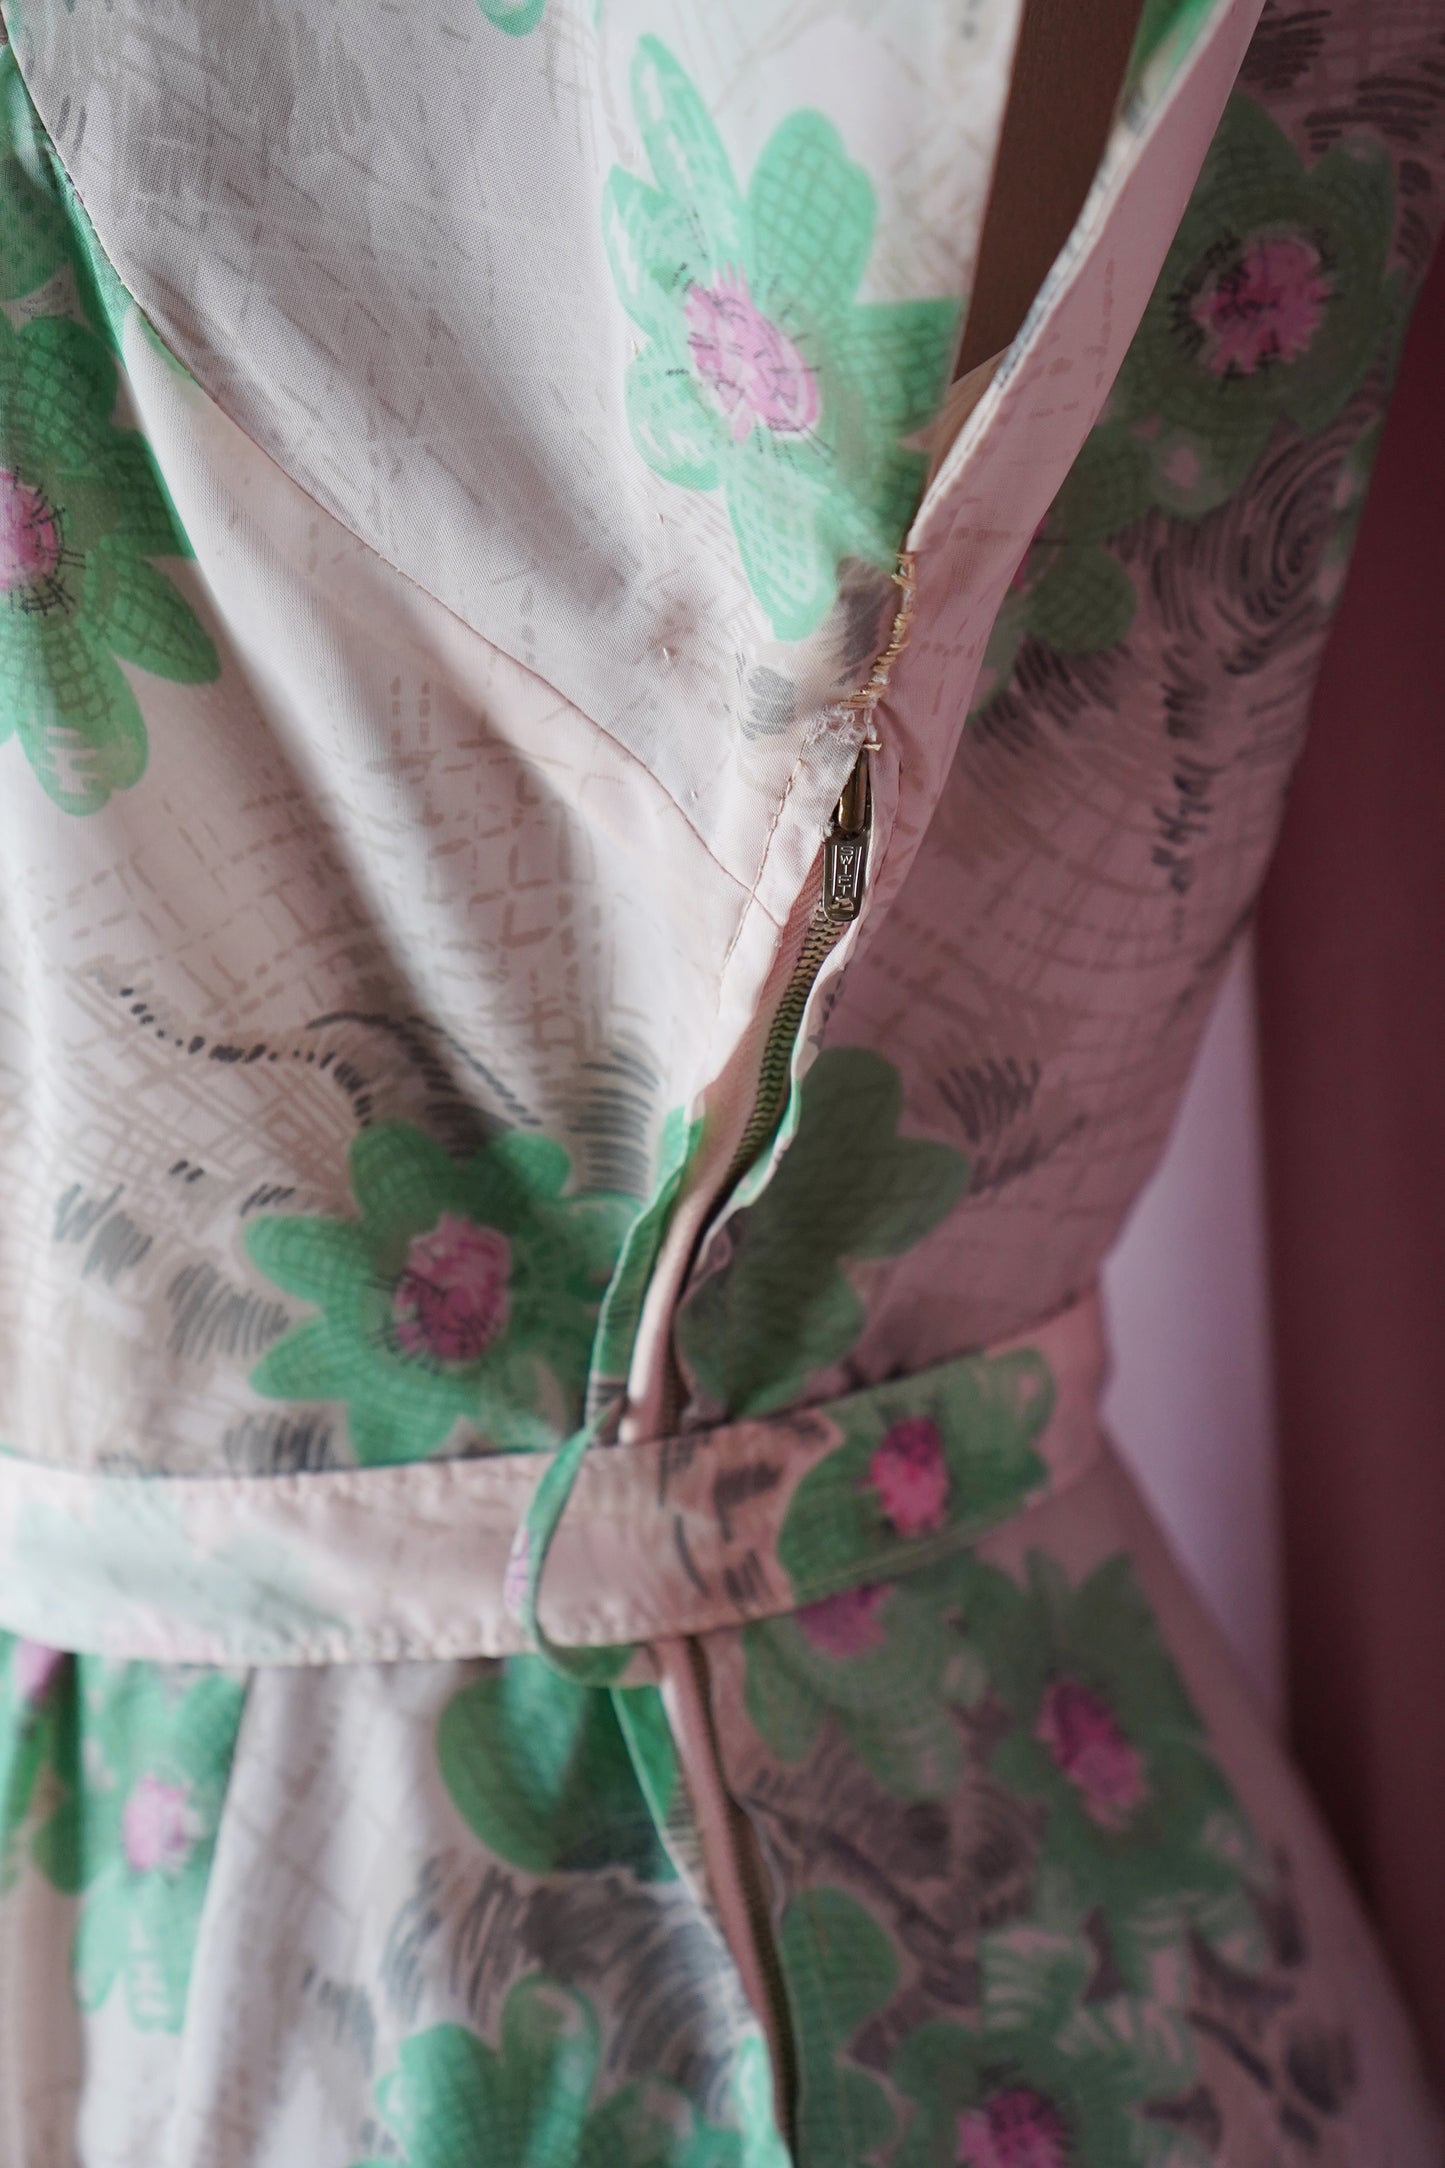 RARE Vintage 1950's Spiderweb Floral Dress